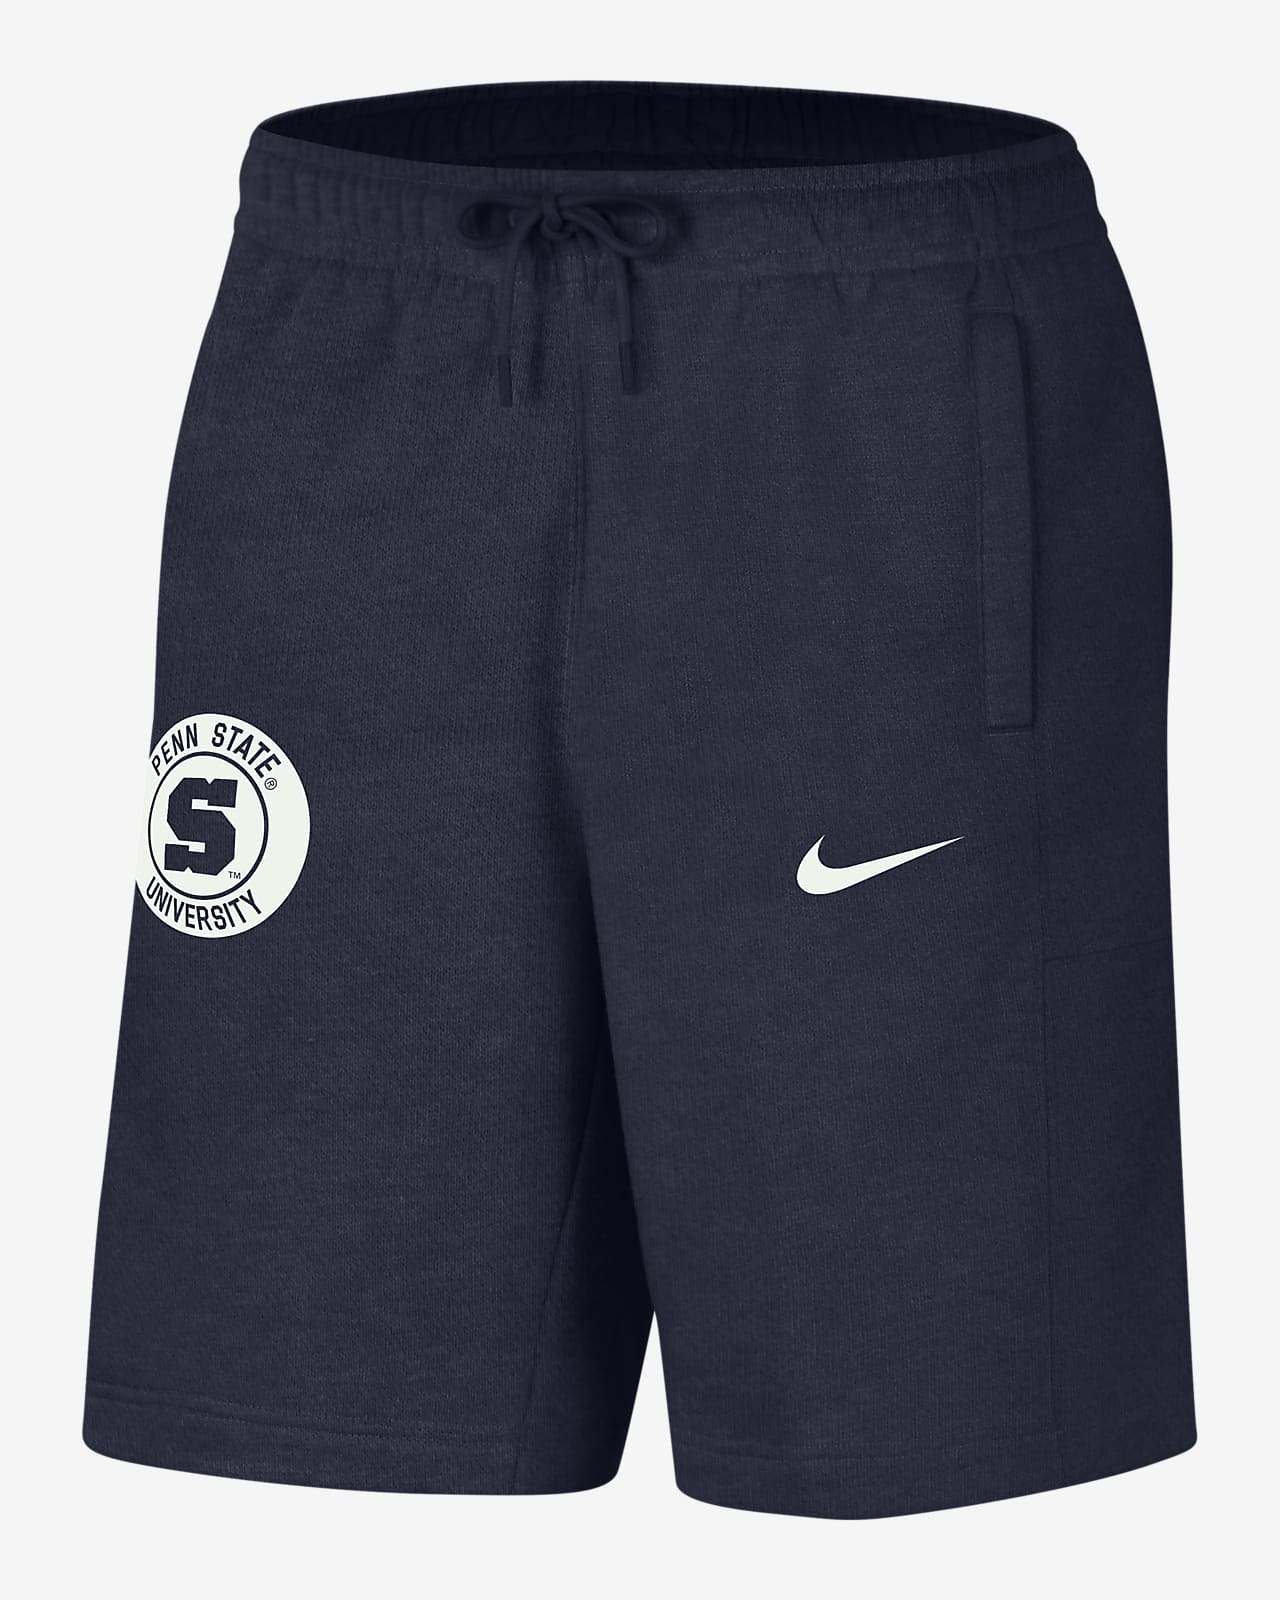 Shorts universitarios Nike para hombre Penn State